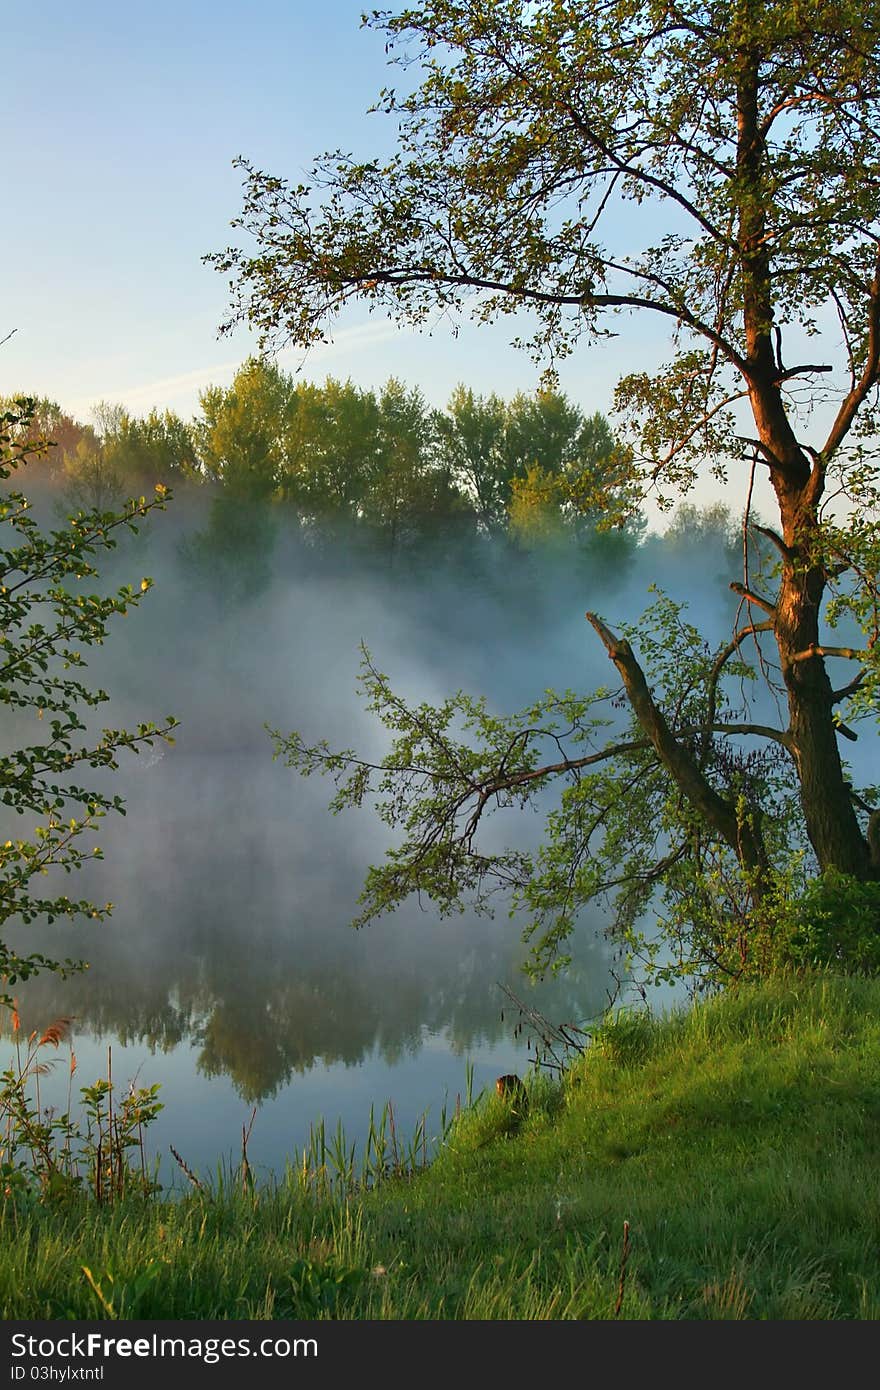 Misty morning on the lake shore